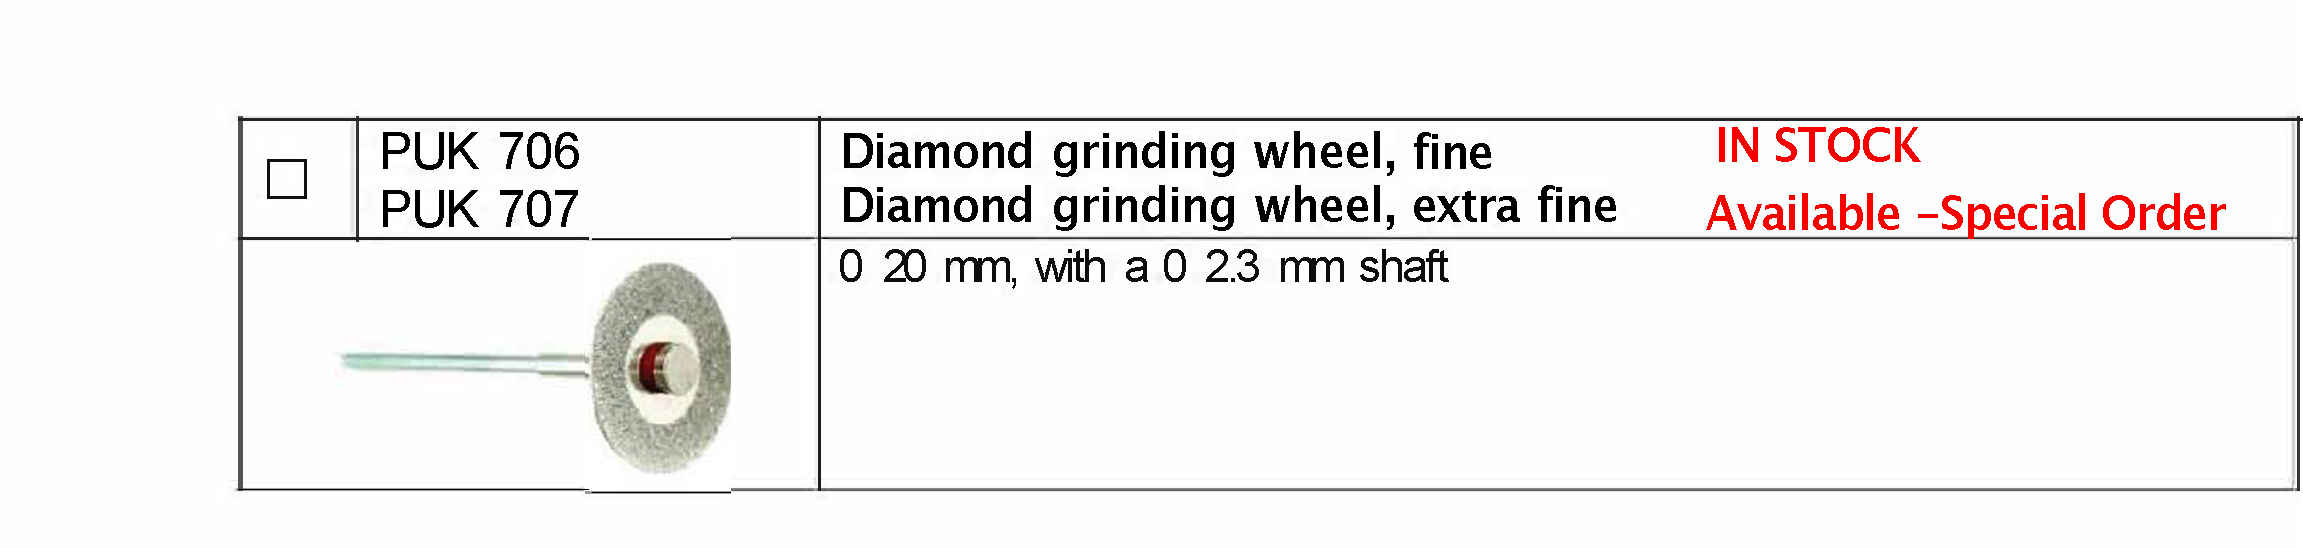 PUK-706: Fine Diamond Grinding Wheel